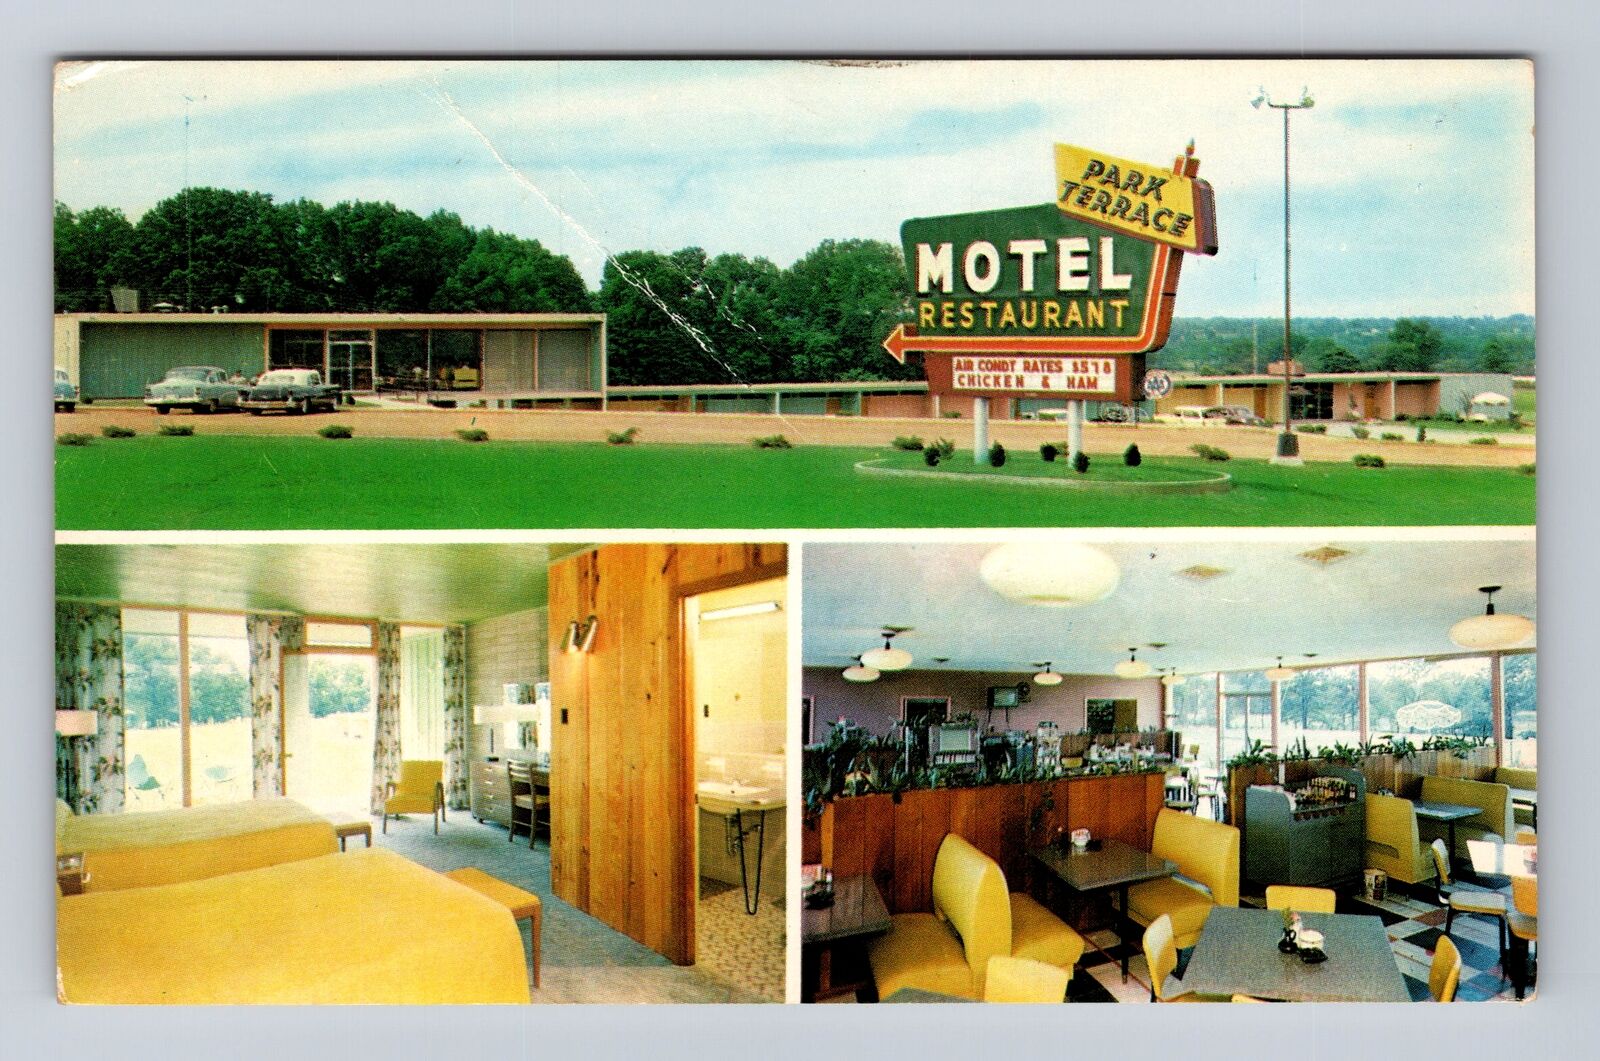 Fulton KY-Kentucky, Park Terrace Motel & Restaurant Advertising Vintage Postcard